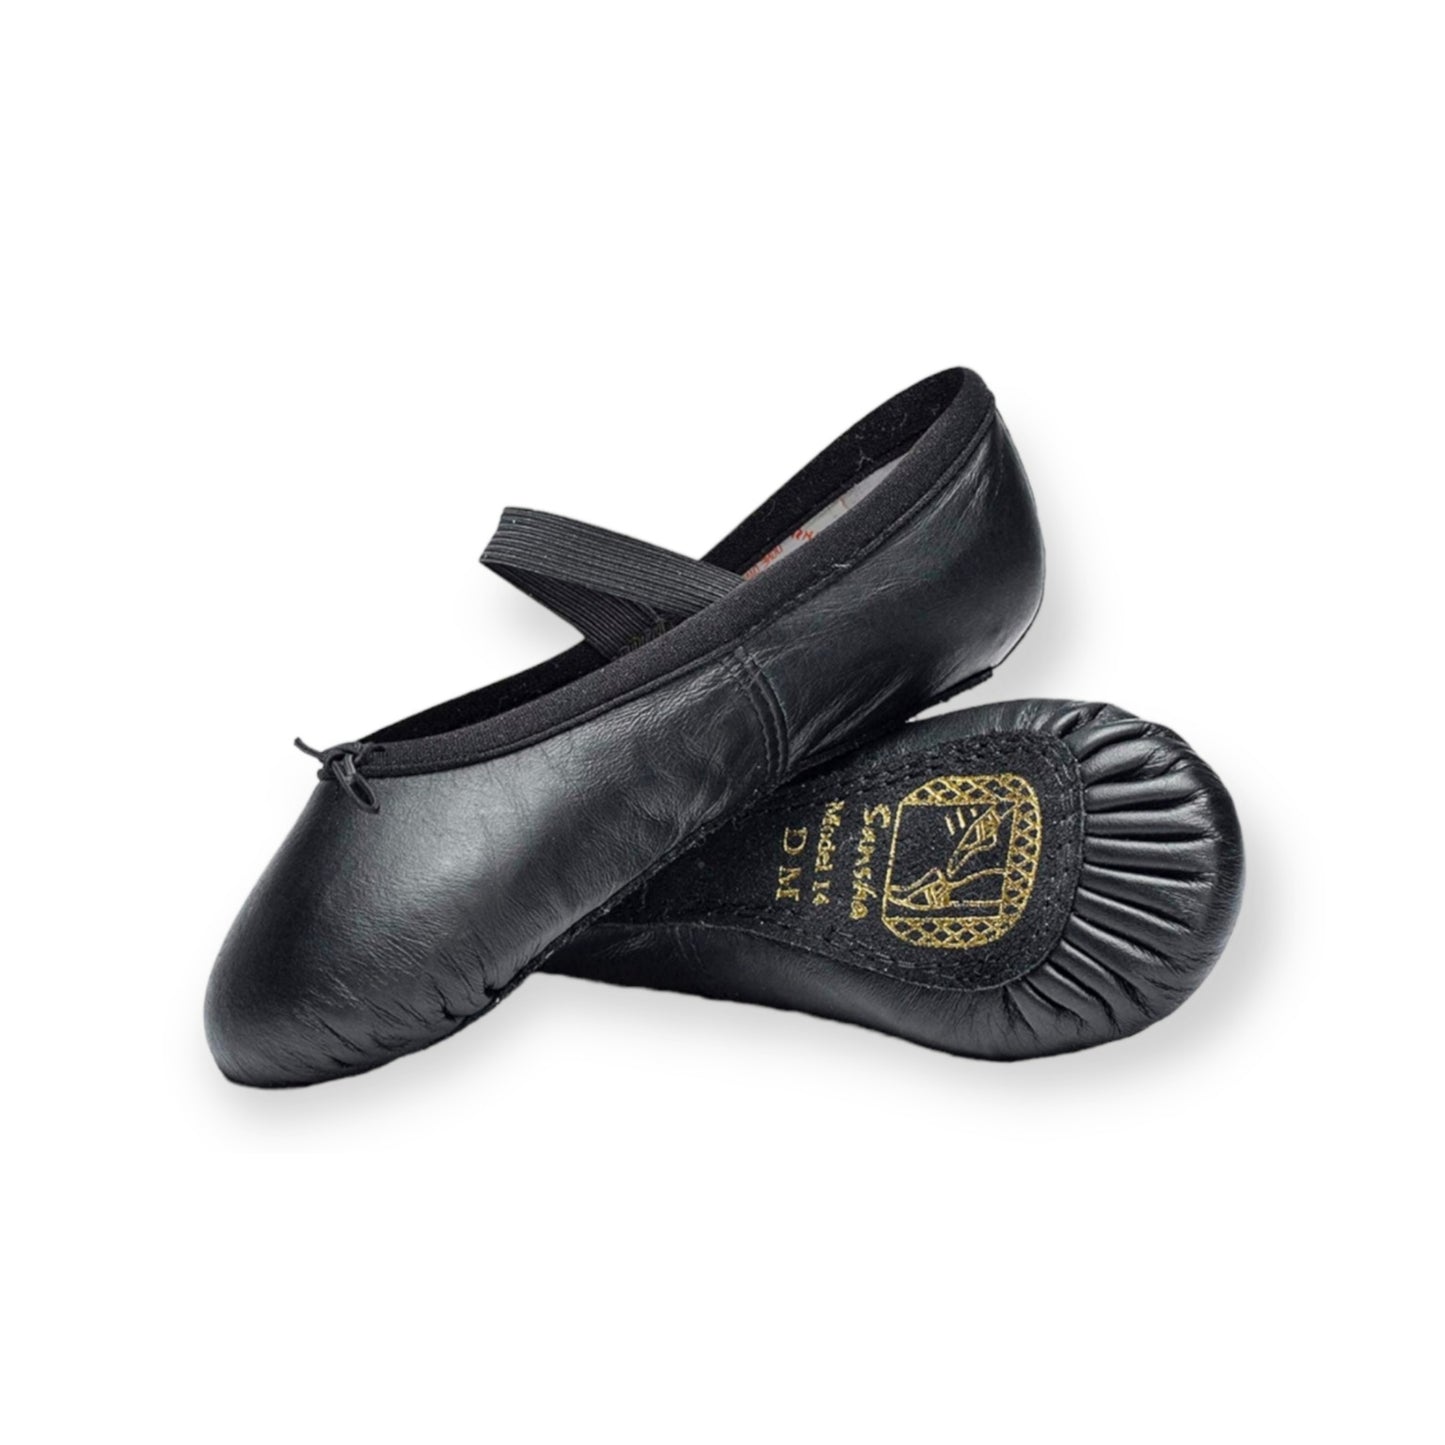 Sansha Black Leather Full Sole Ballet Shoes